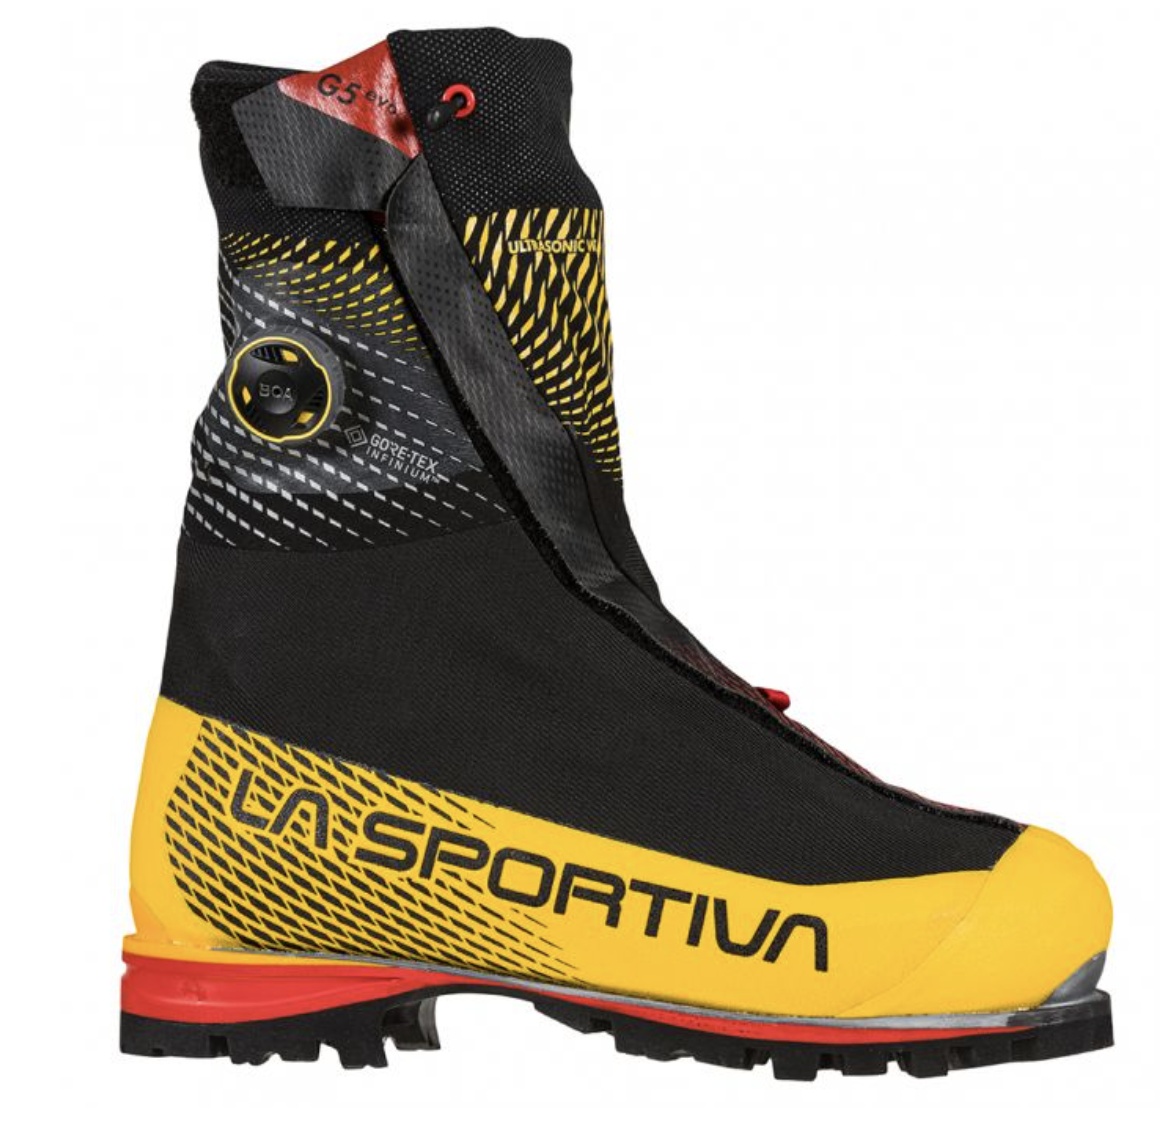 la sportiva g5 evo mountaineering boot review